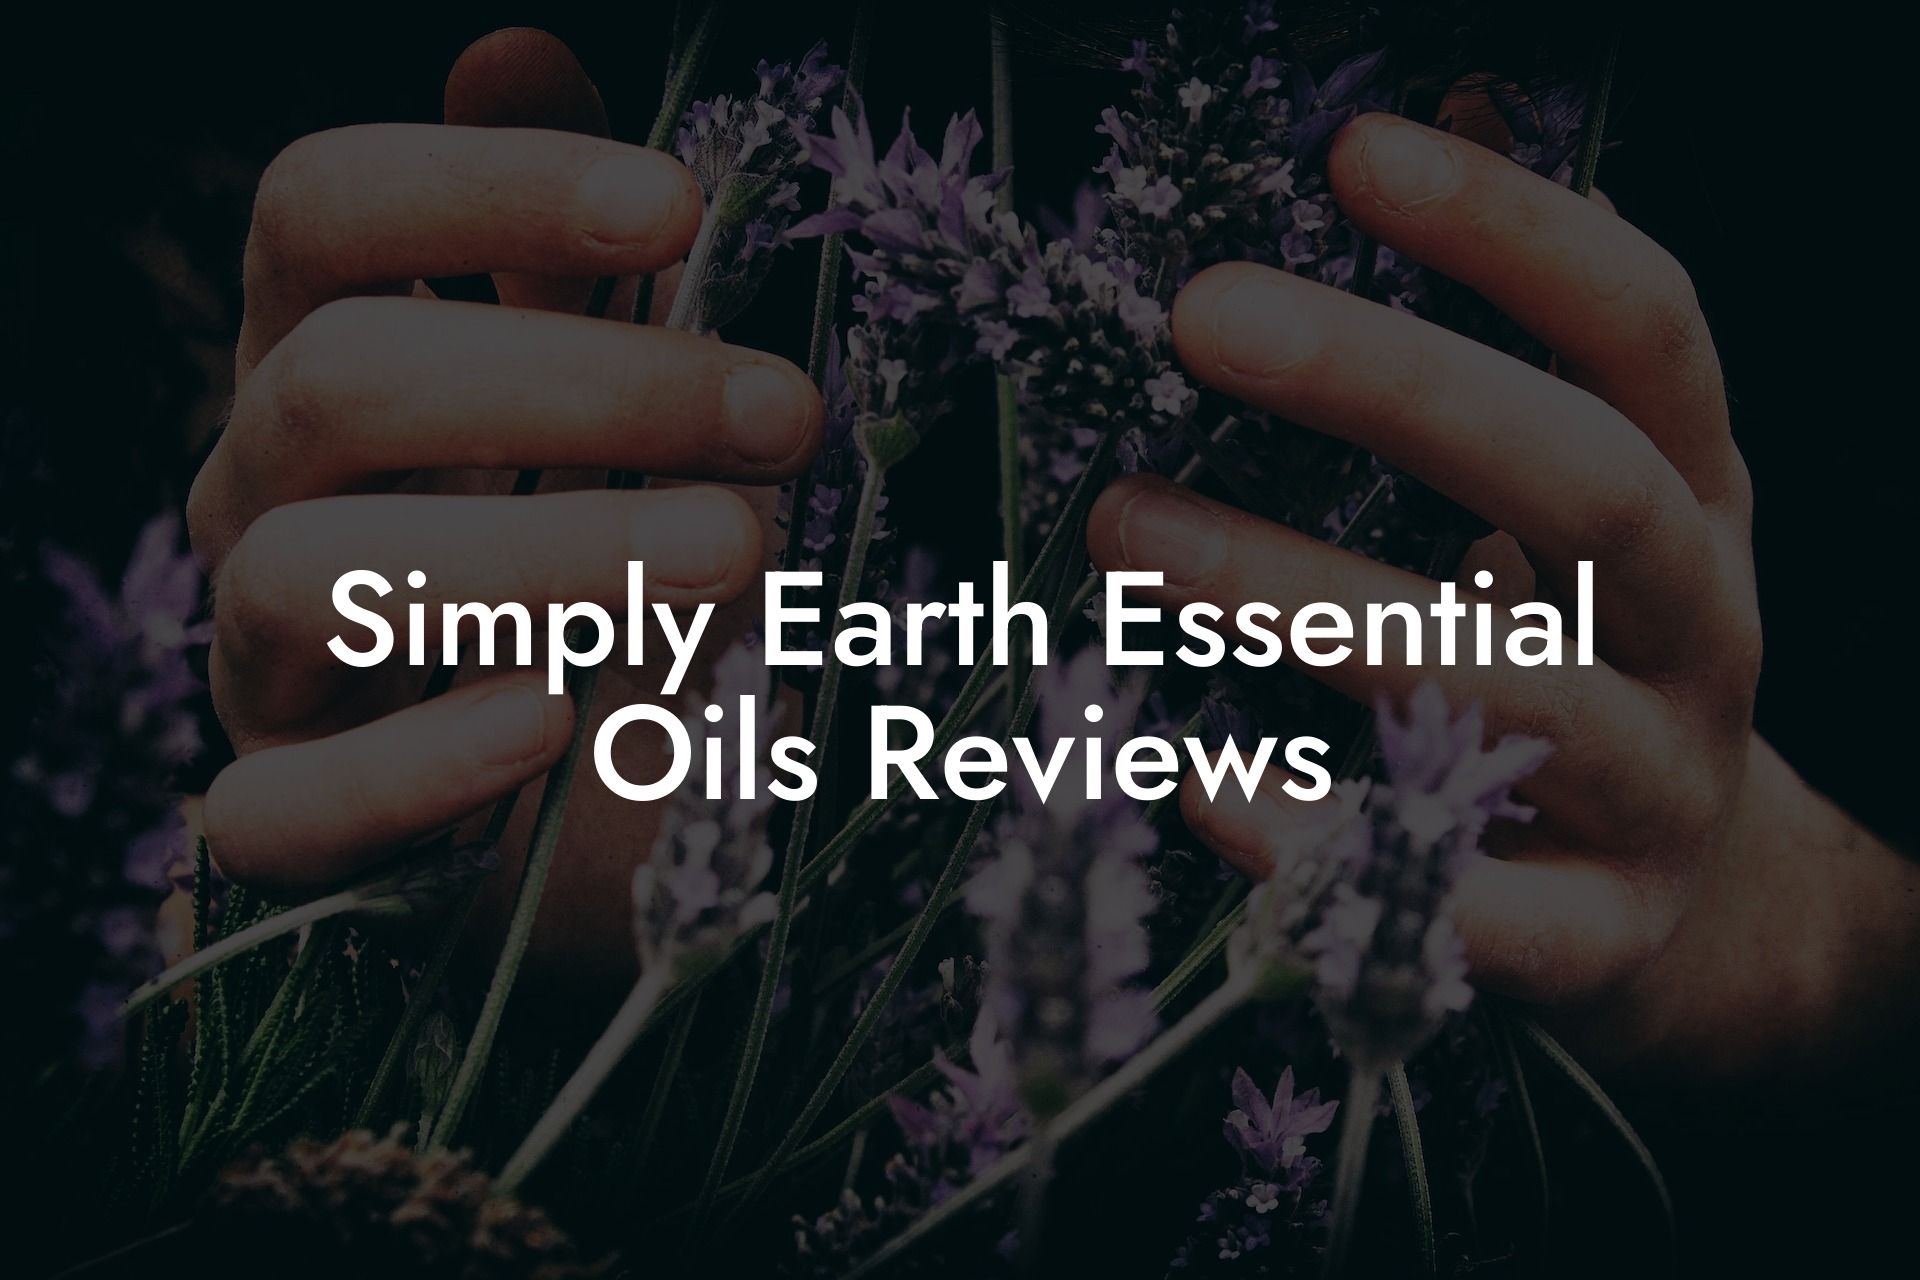 Simply Earth Essential Oils Reviews